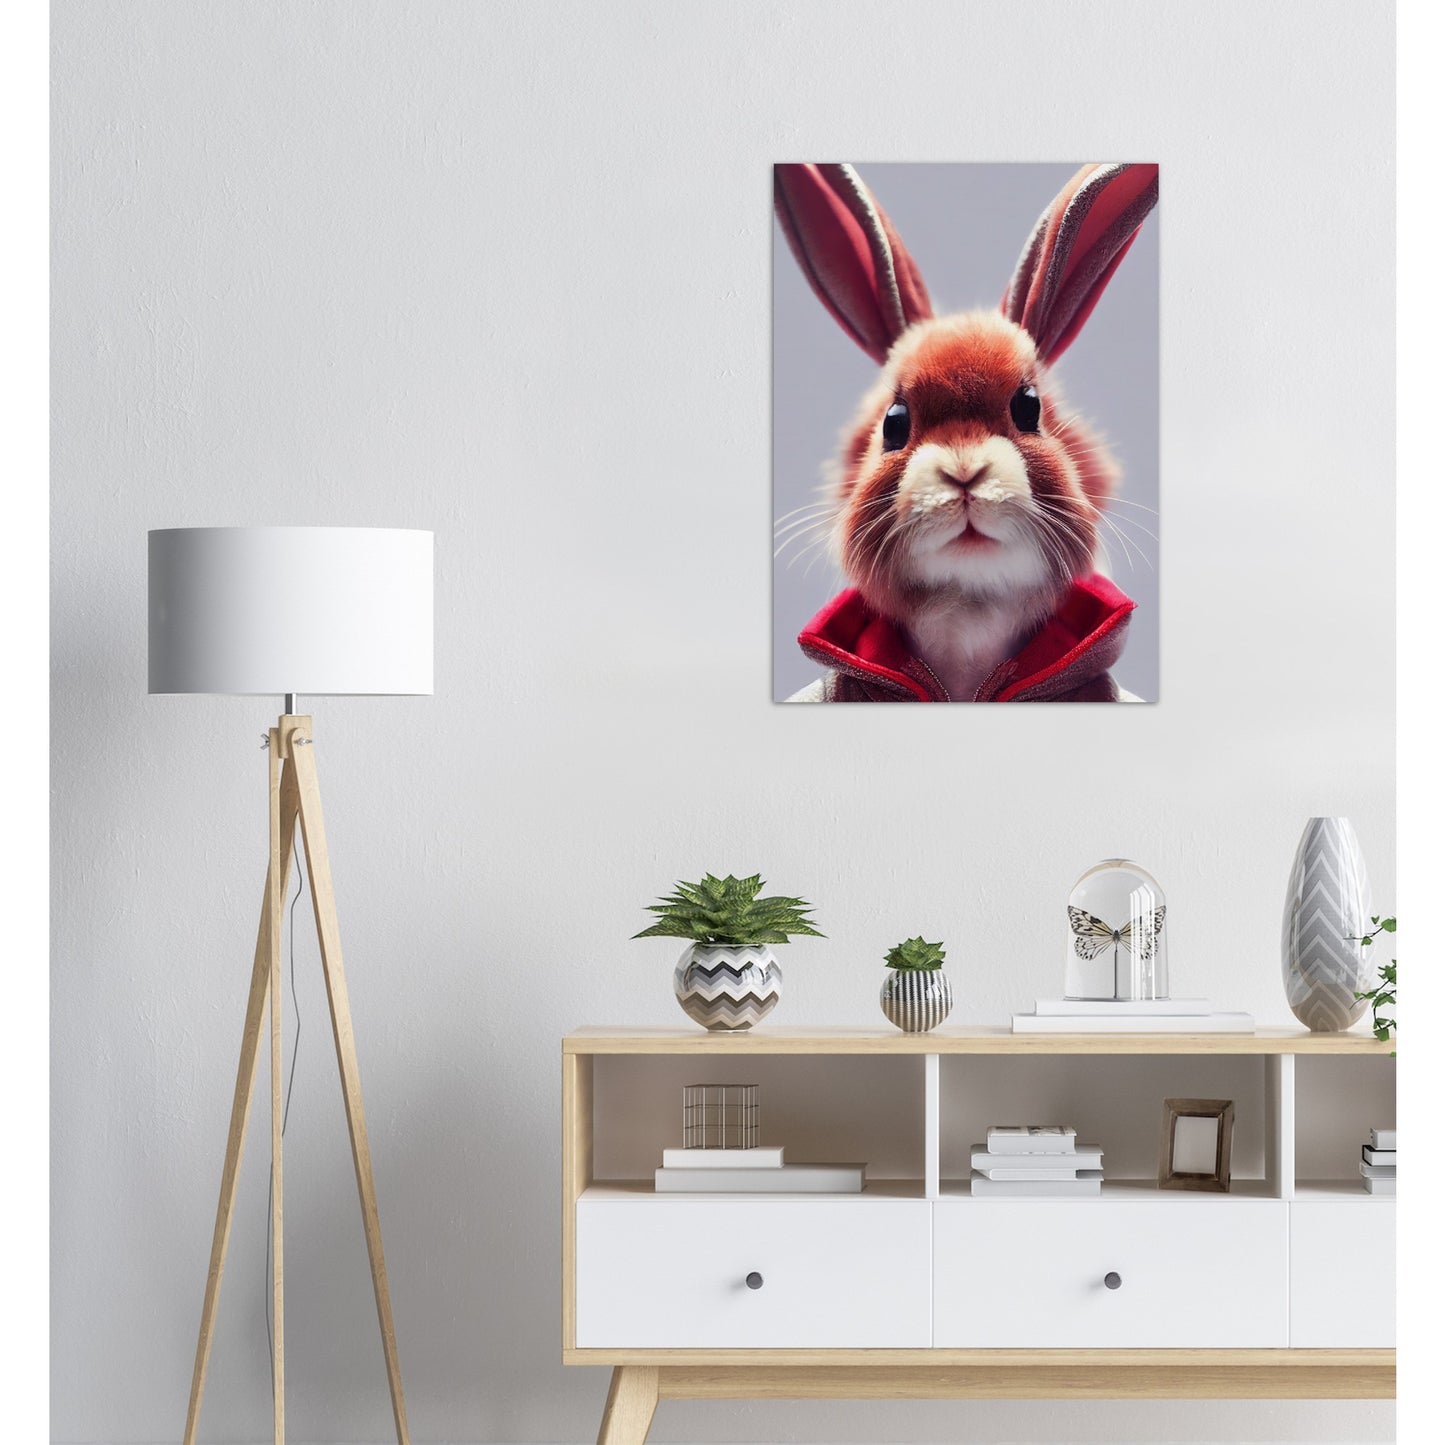 Poster in Museumsqualität - Bunny in grey red tracksuit - "Julius" - personalized mug - customized mug - Cute rabbit - Marke:- Pixelboys - Brand - Art Prints - Marke - Wandkunst - Papierstärke: 250g/qm - Wall Art - Bunny crey - Skater Betty - Hasen Gang - Original - Künstler:Pixelboys - Poster with frame - Office Poster - Trend - Wandschmuck - Atelier USA - 